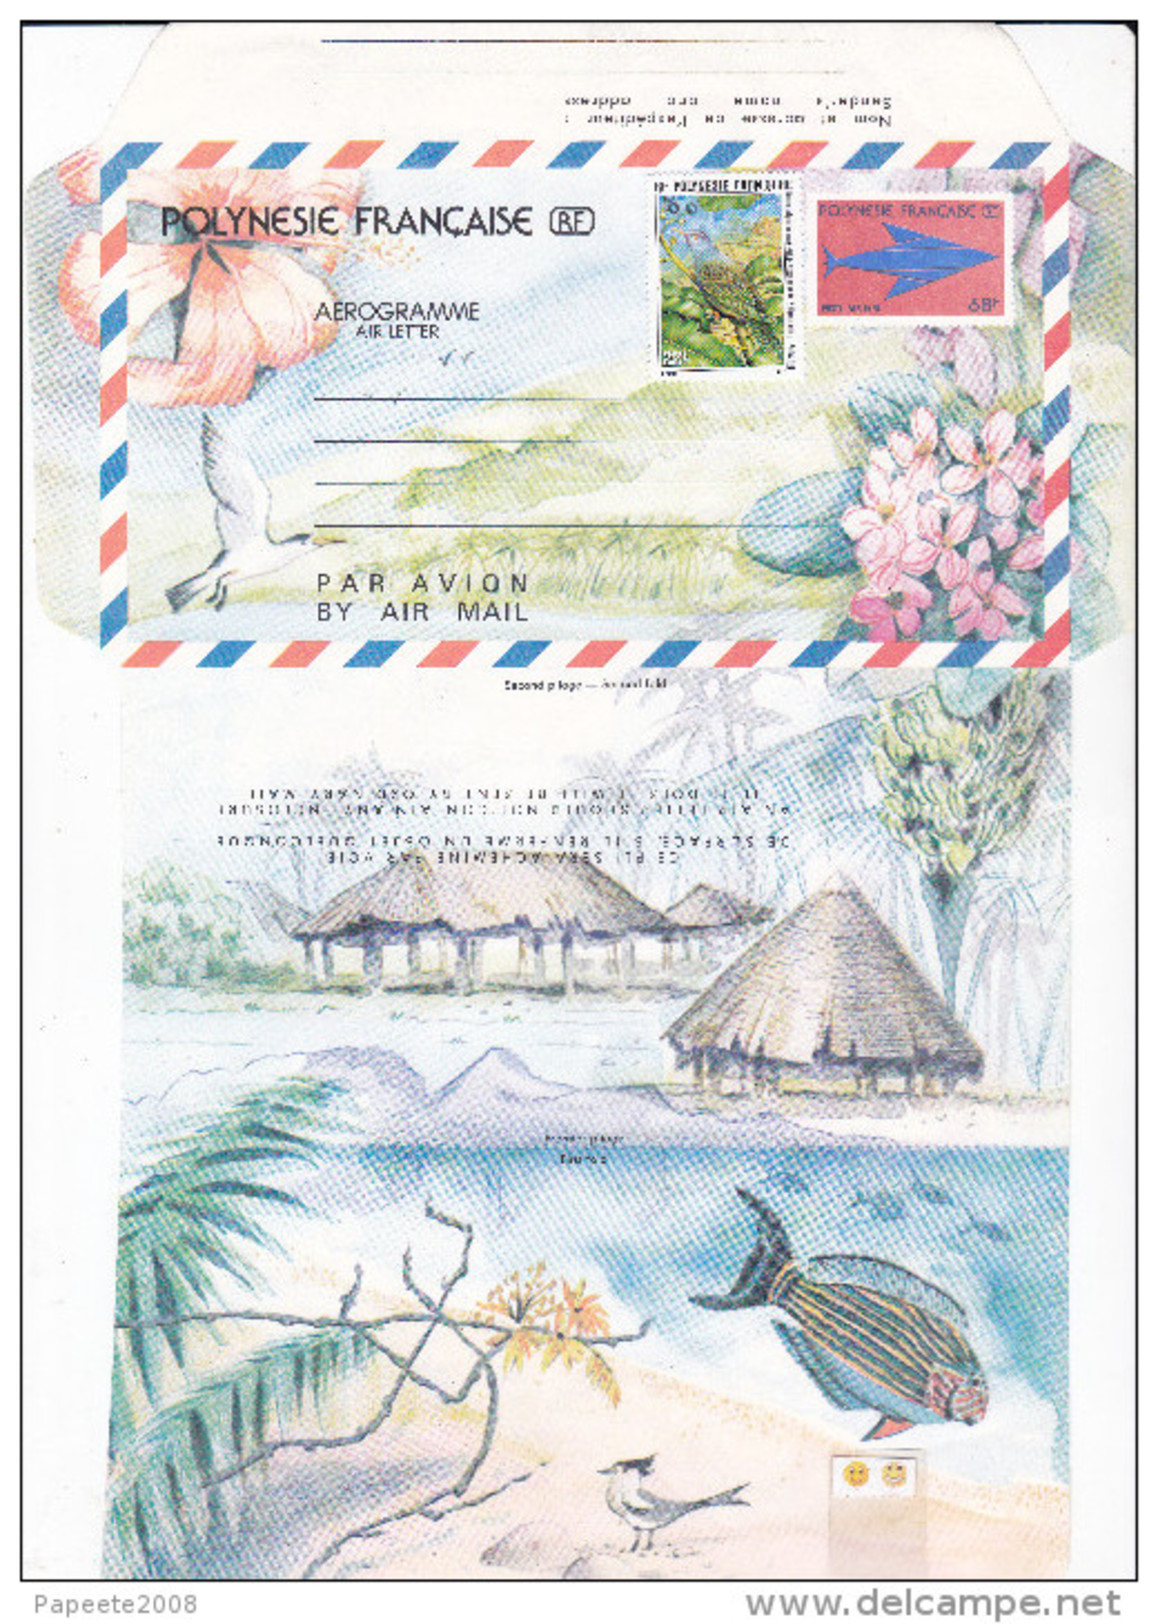 Polynesie Française / Tahiti - Aérogramme à 68 F CFP - 1988 - Neuf / Surchargé à 100 F - Aerogrammi